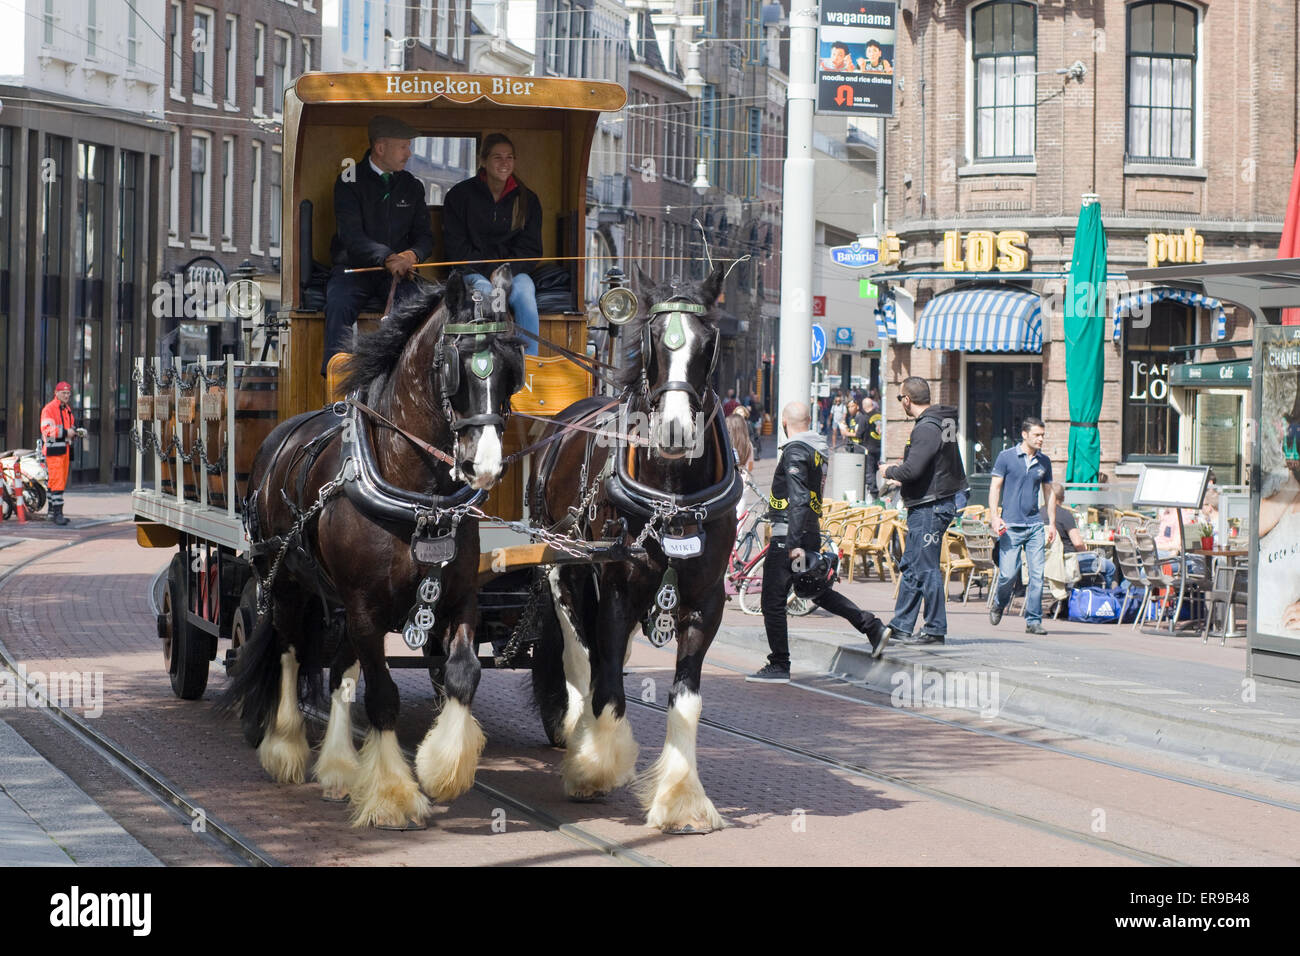 Heineken dray horses Pulling Barrels of Lager in Amsterdam Stock Photo